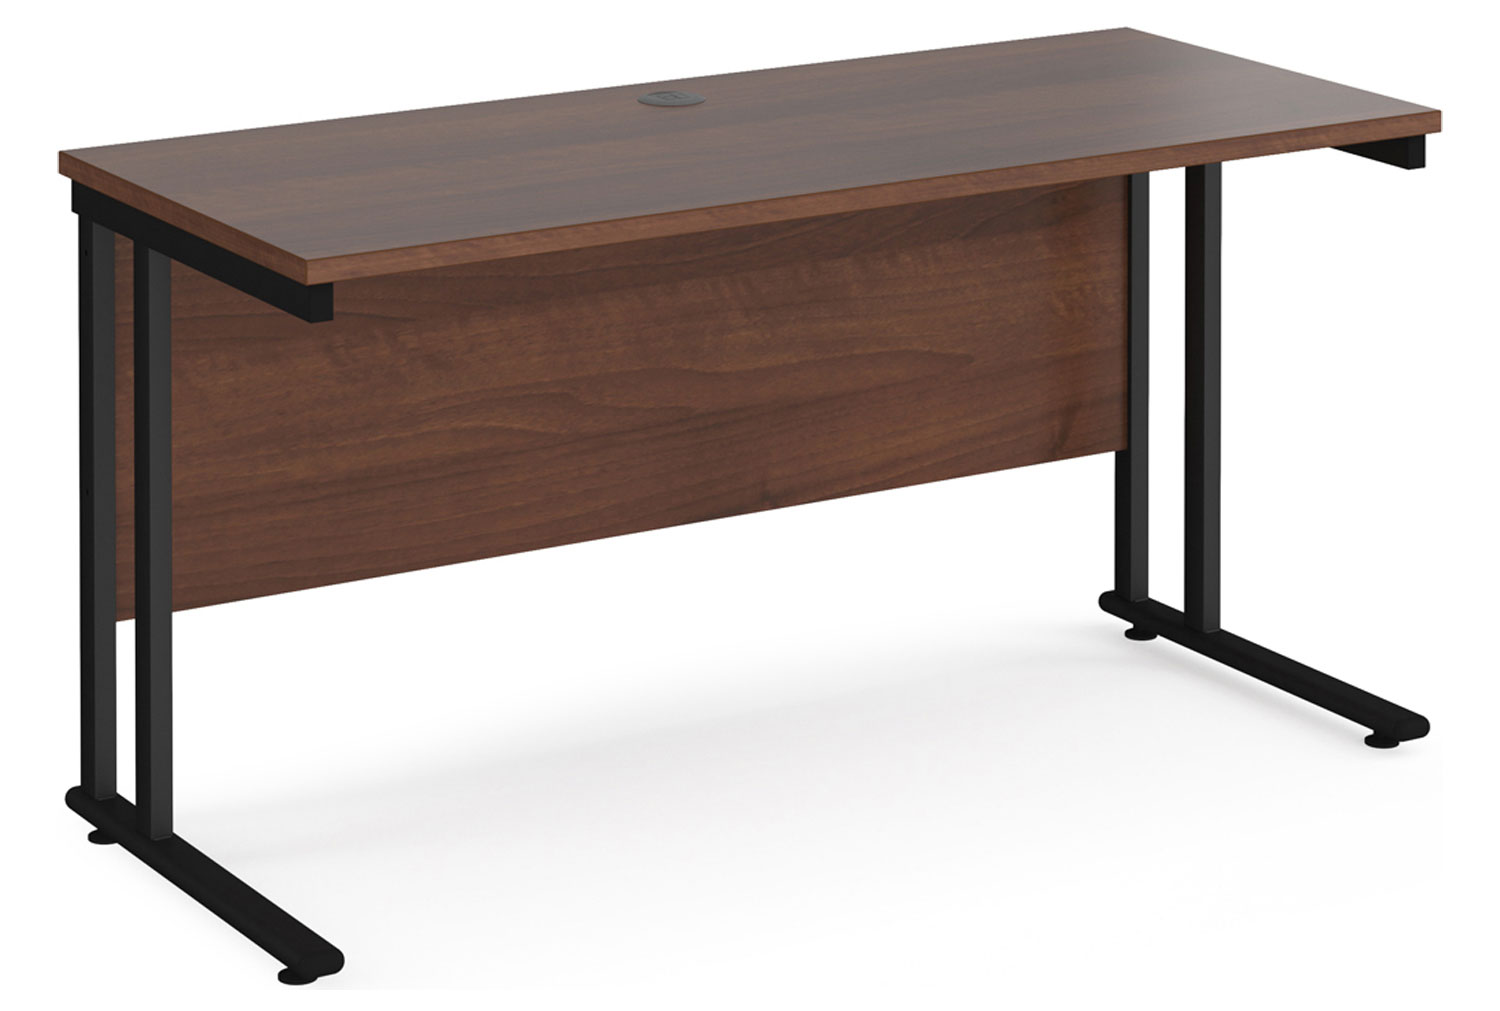 Value Line Deluxe C-Leg Narrow Rectangular Office Desk (Black Legs), 140wx60dx73h (cm), Walnut